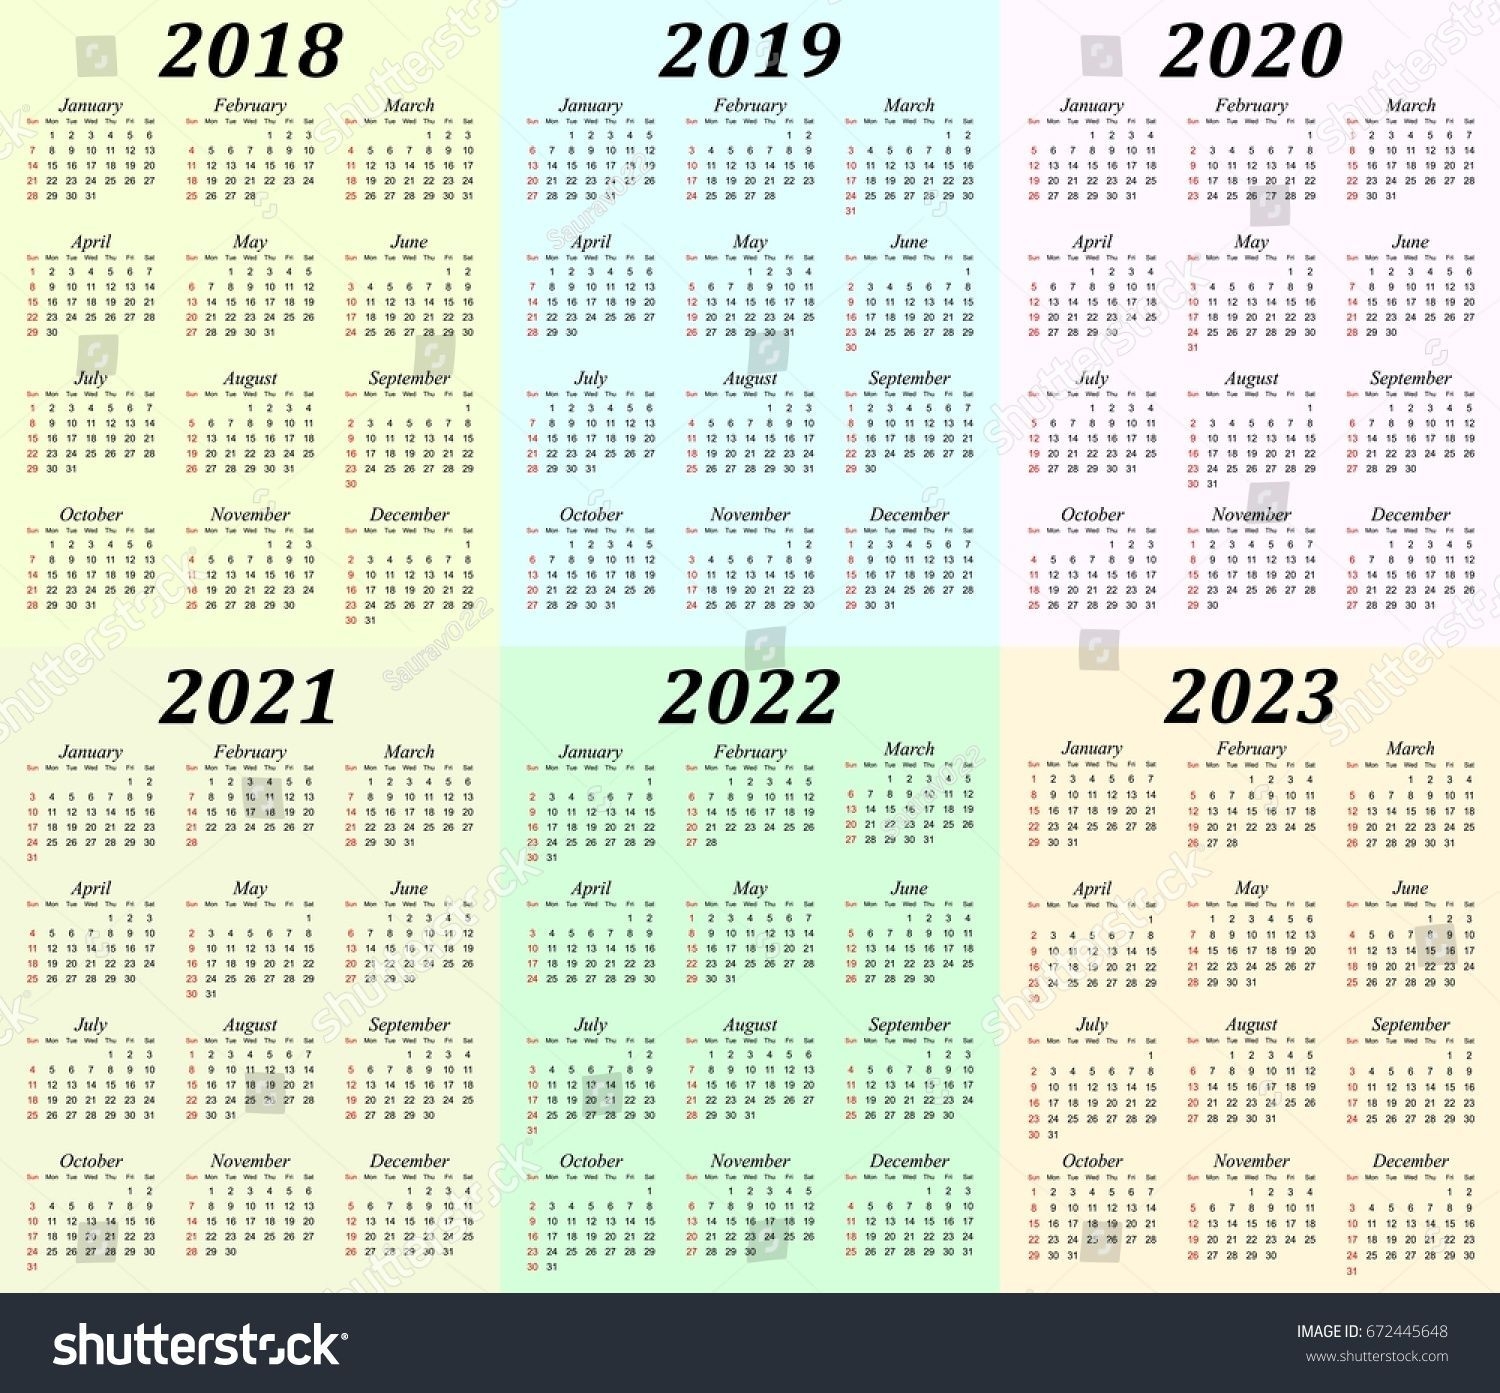 5 Year Calendar 2019 To 2023 In 2020 | Calendar Printables